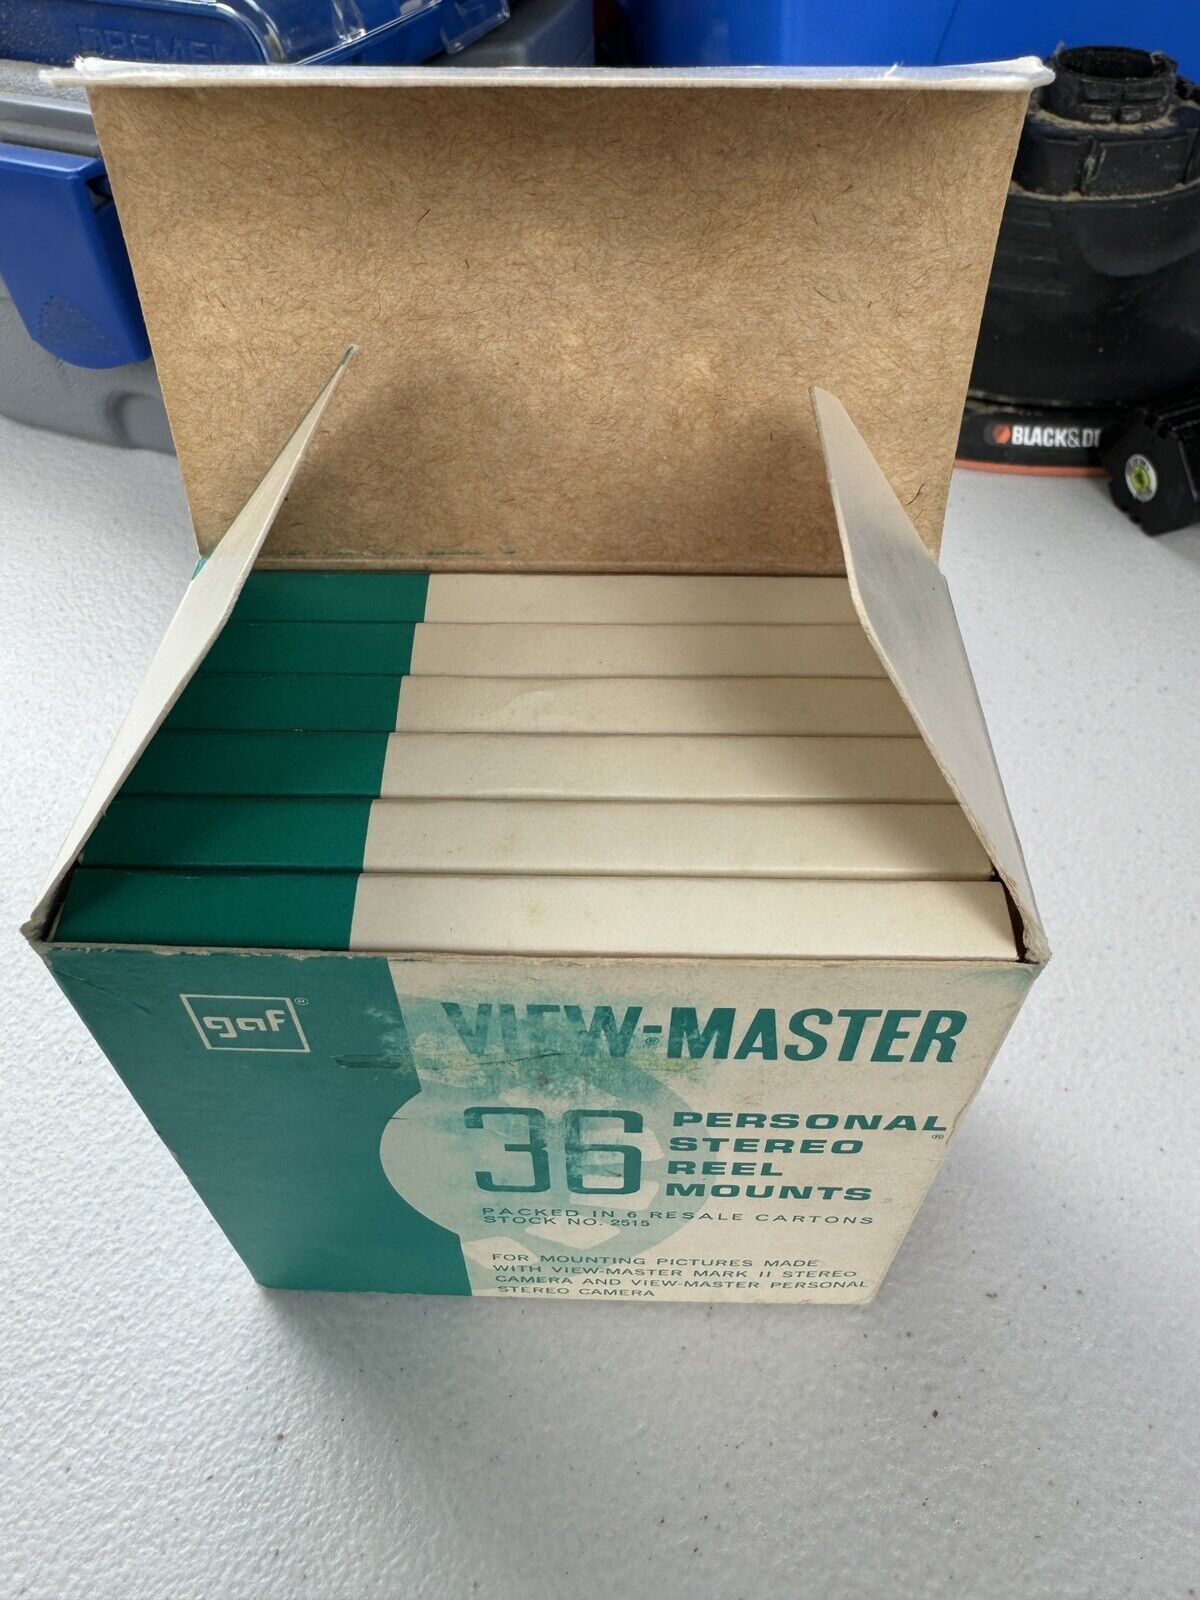 Vintage GAF View-Master Personal Stereo Reel Mounts PACK OF 36 w/ Envelopes